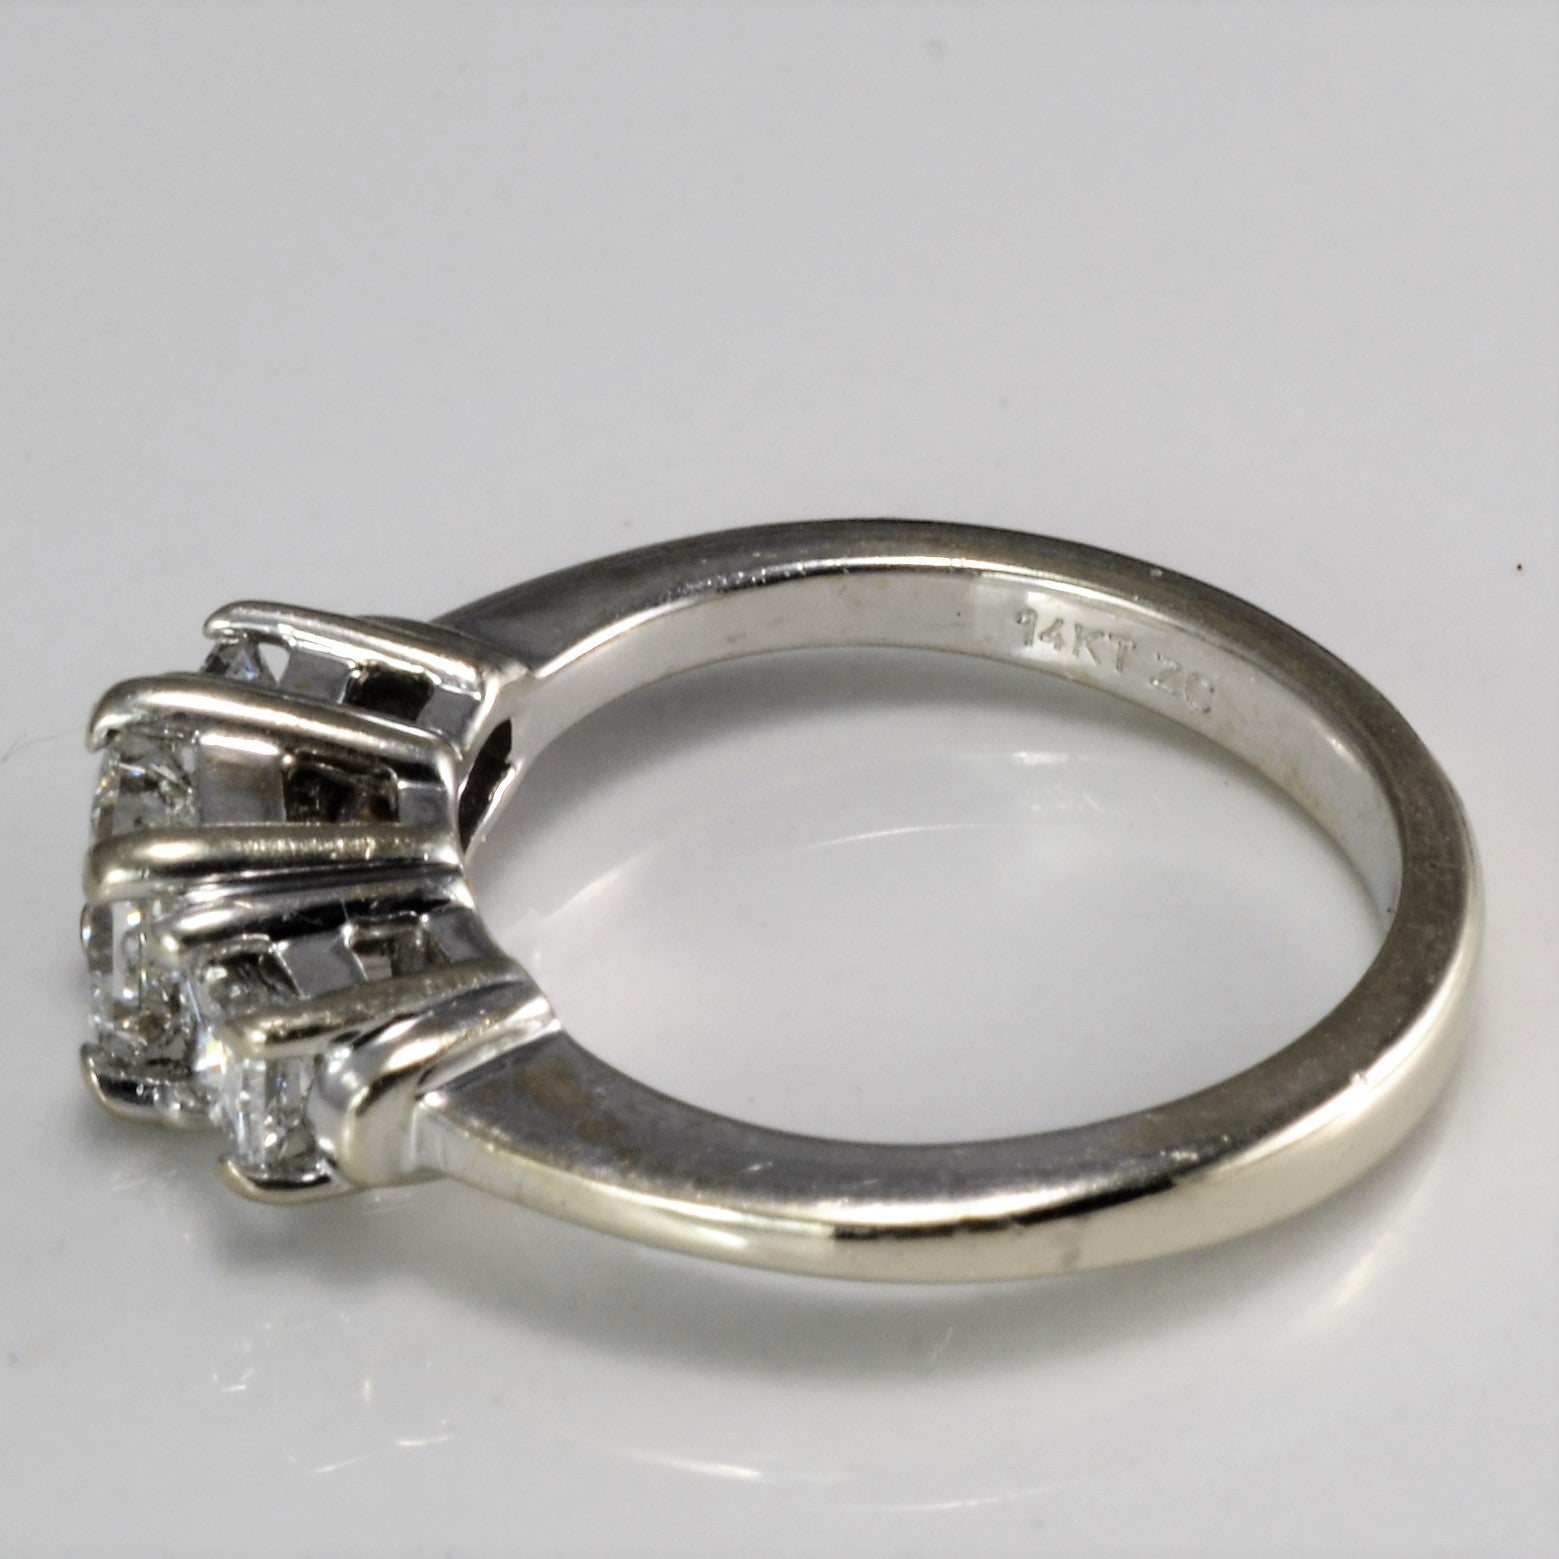 Three Stone Princess Diamond Engagement Ring | 0.88 ctw, SZ 5.25 |